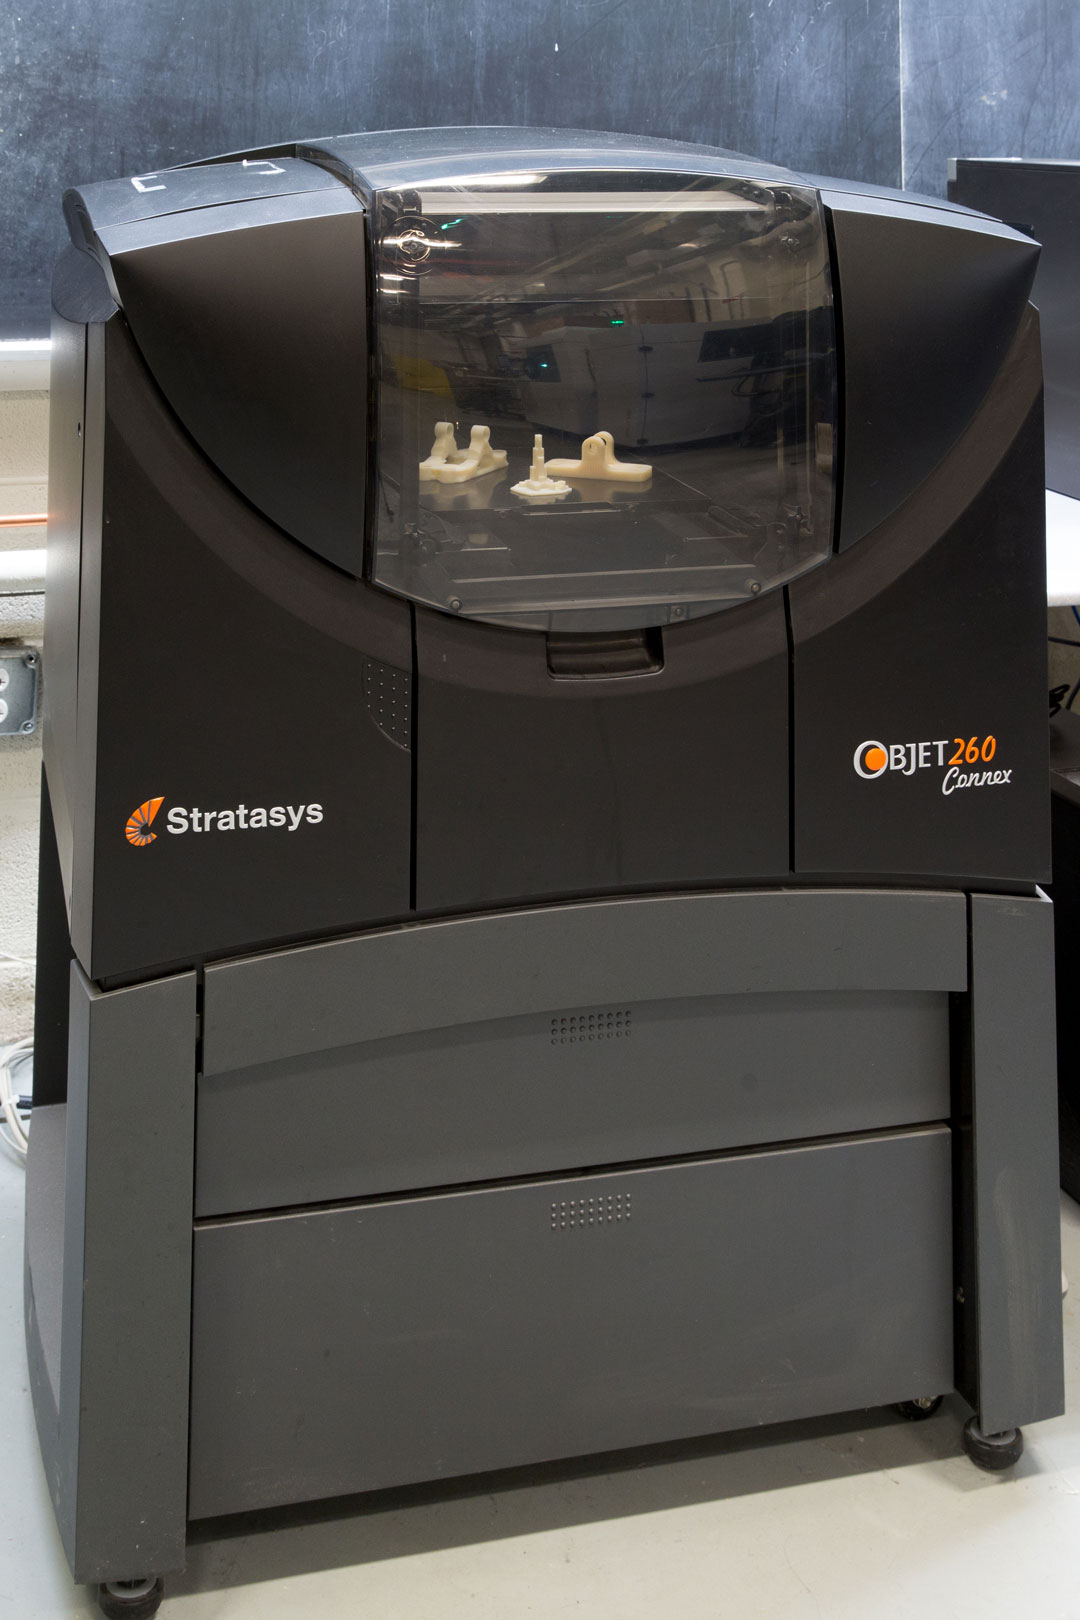 Stratasys Objet260 Connex 3D Printer